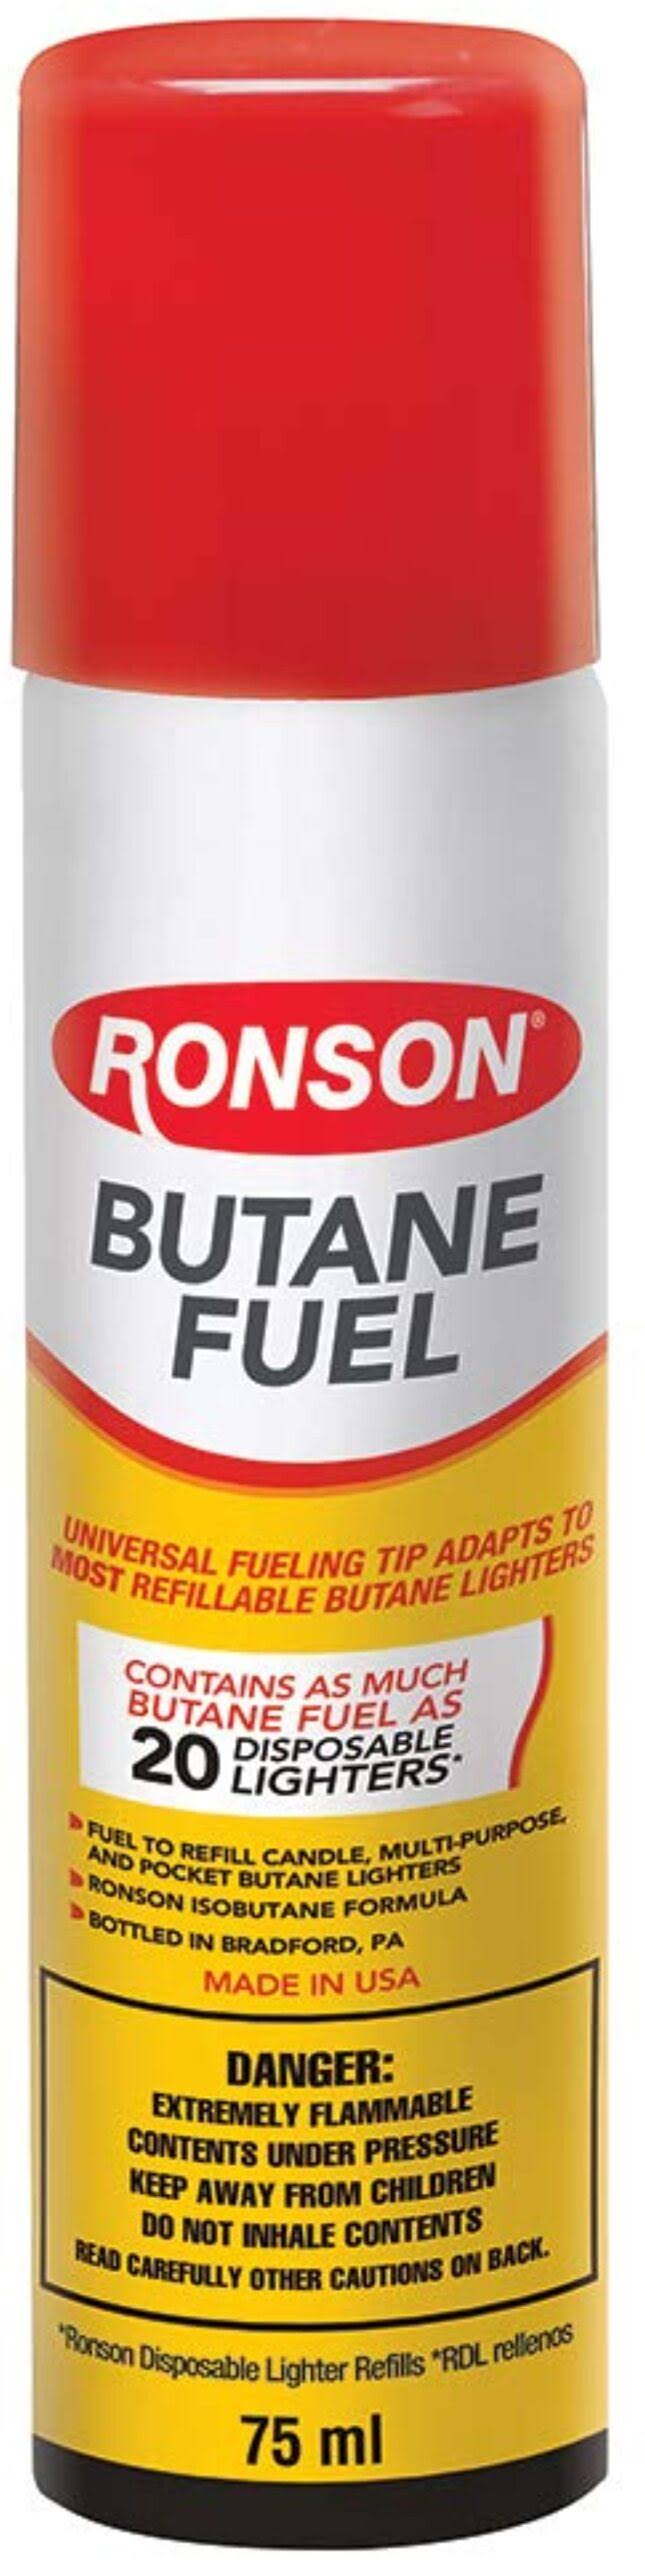 Ronson Ultra Butane Fuel - 78g